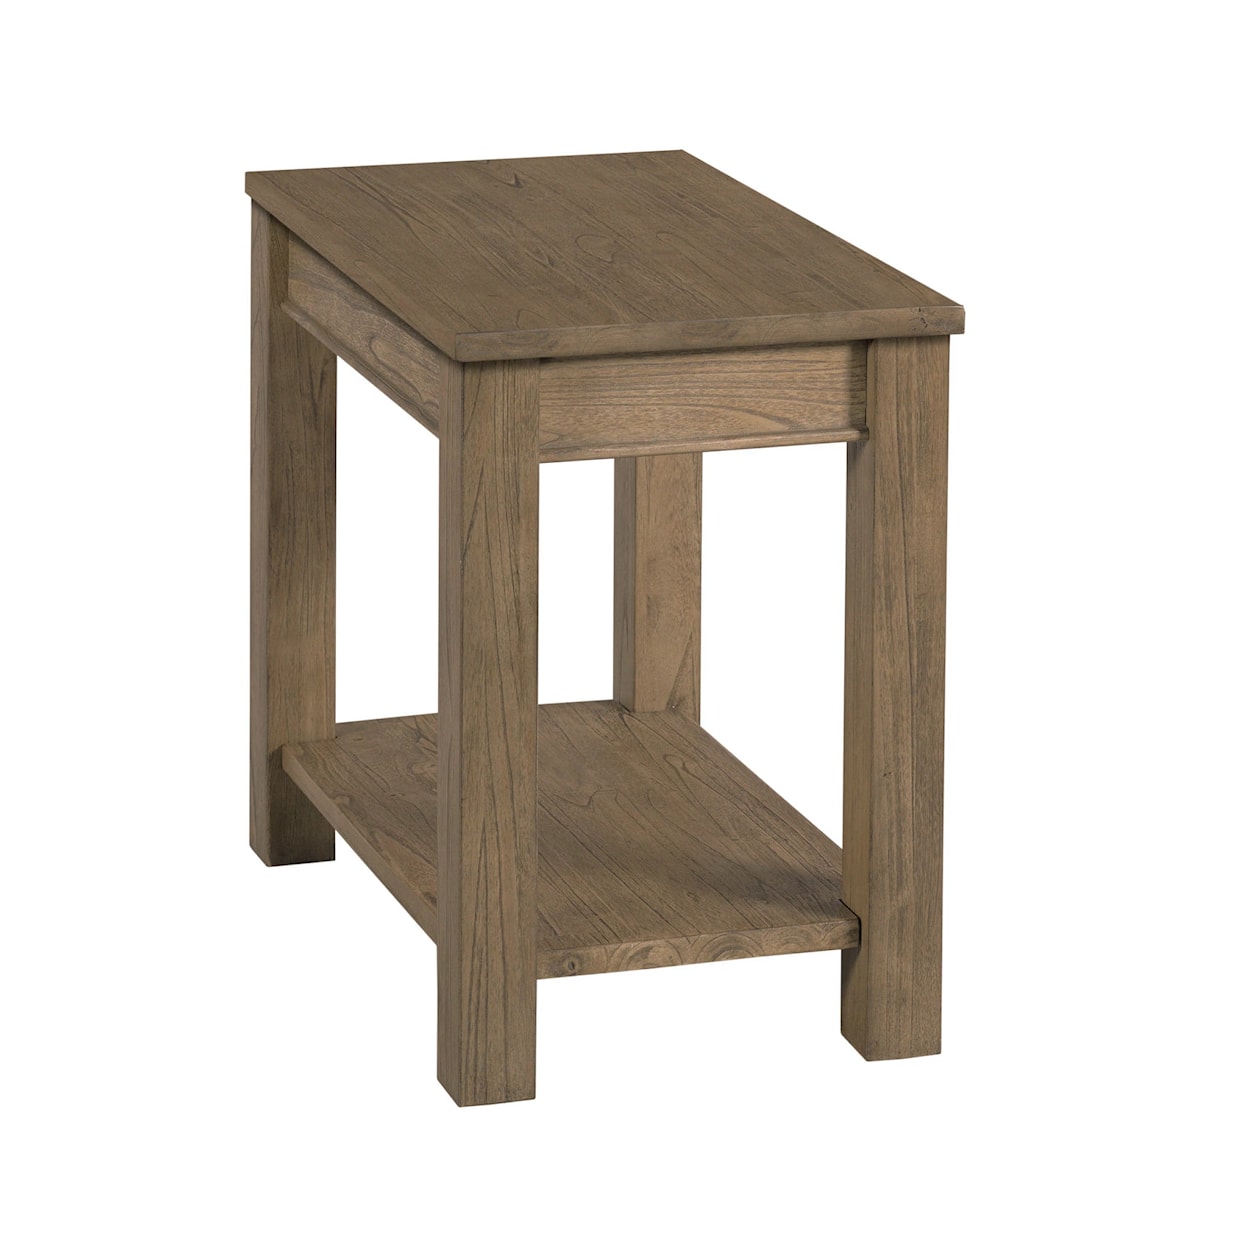 Kincaid Furniture Debut Madero Chairside Table